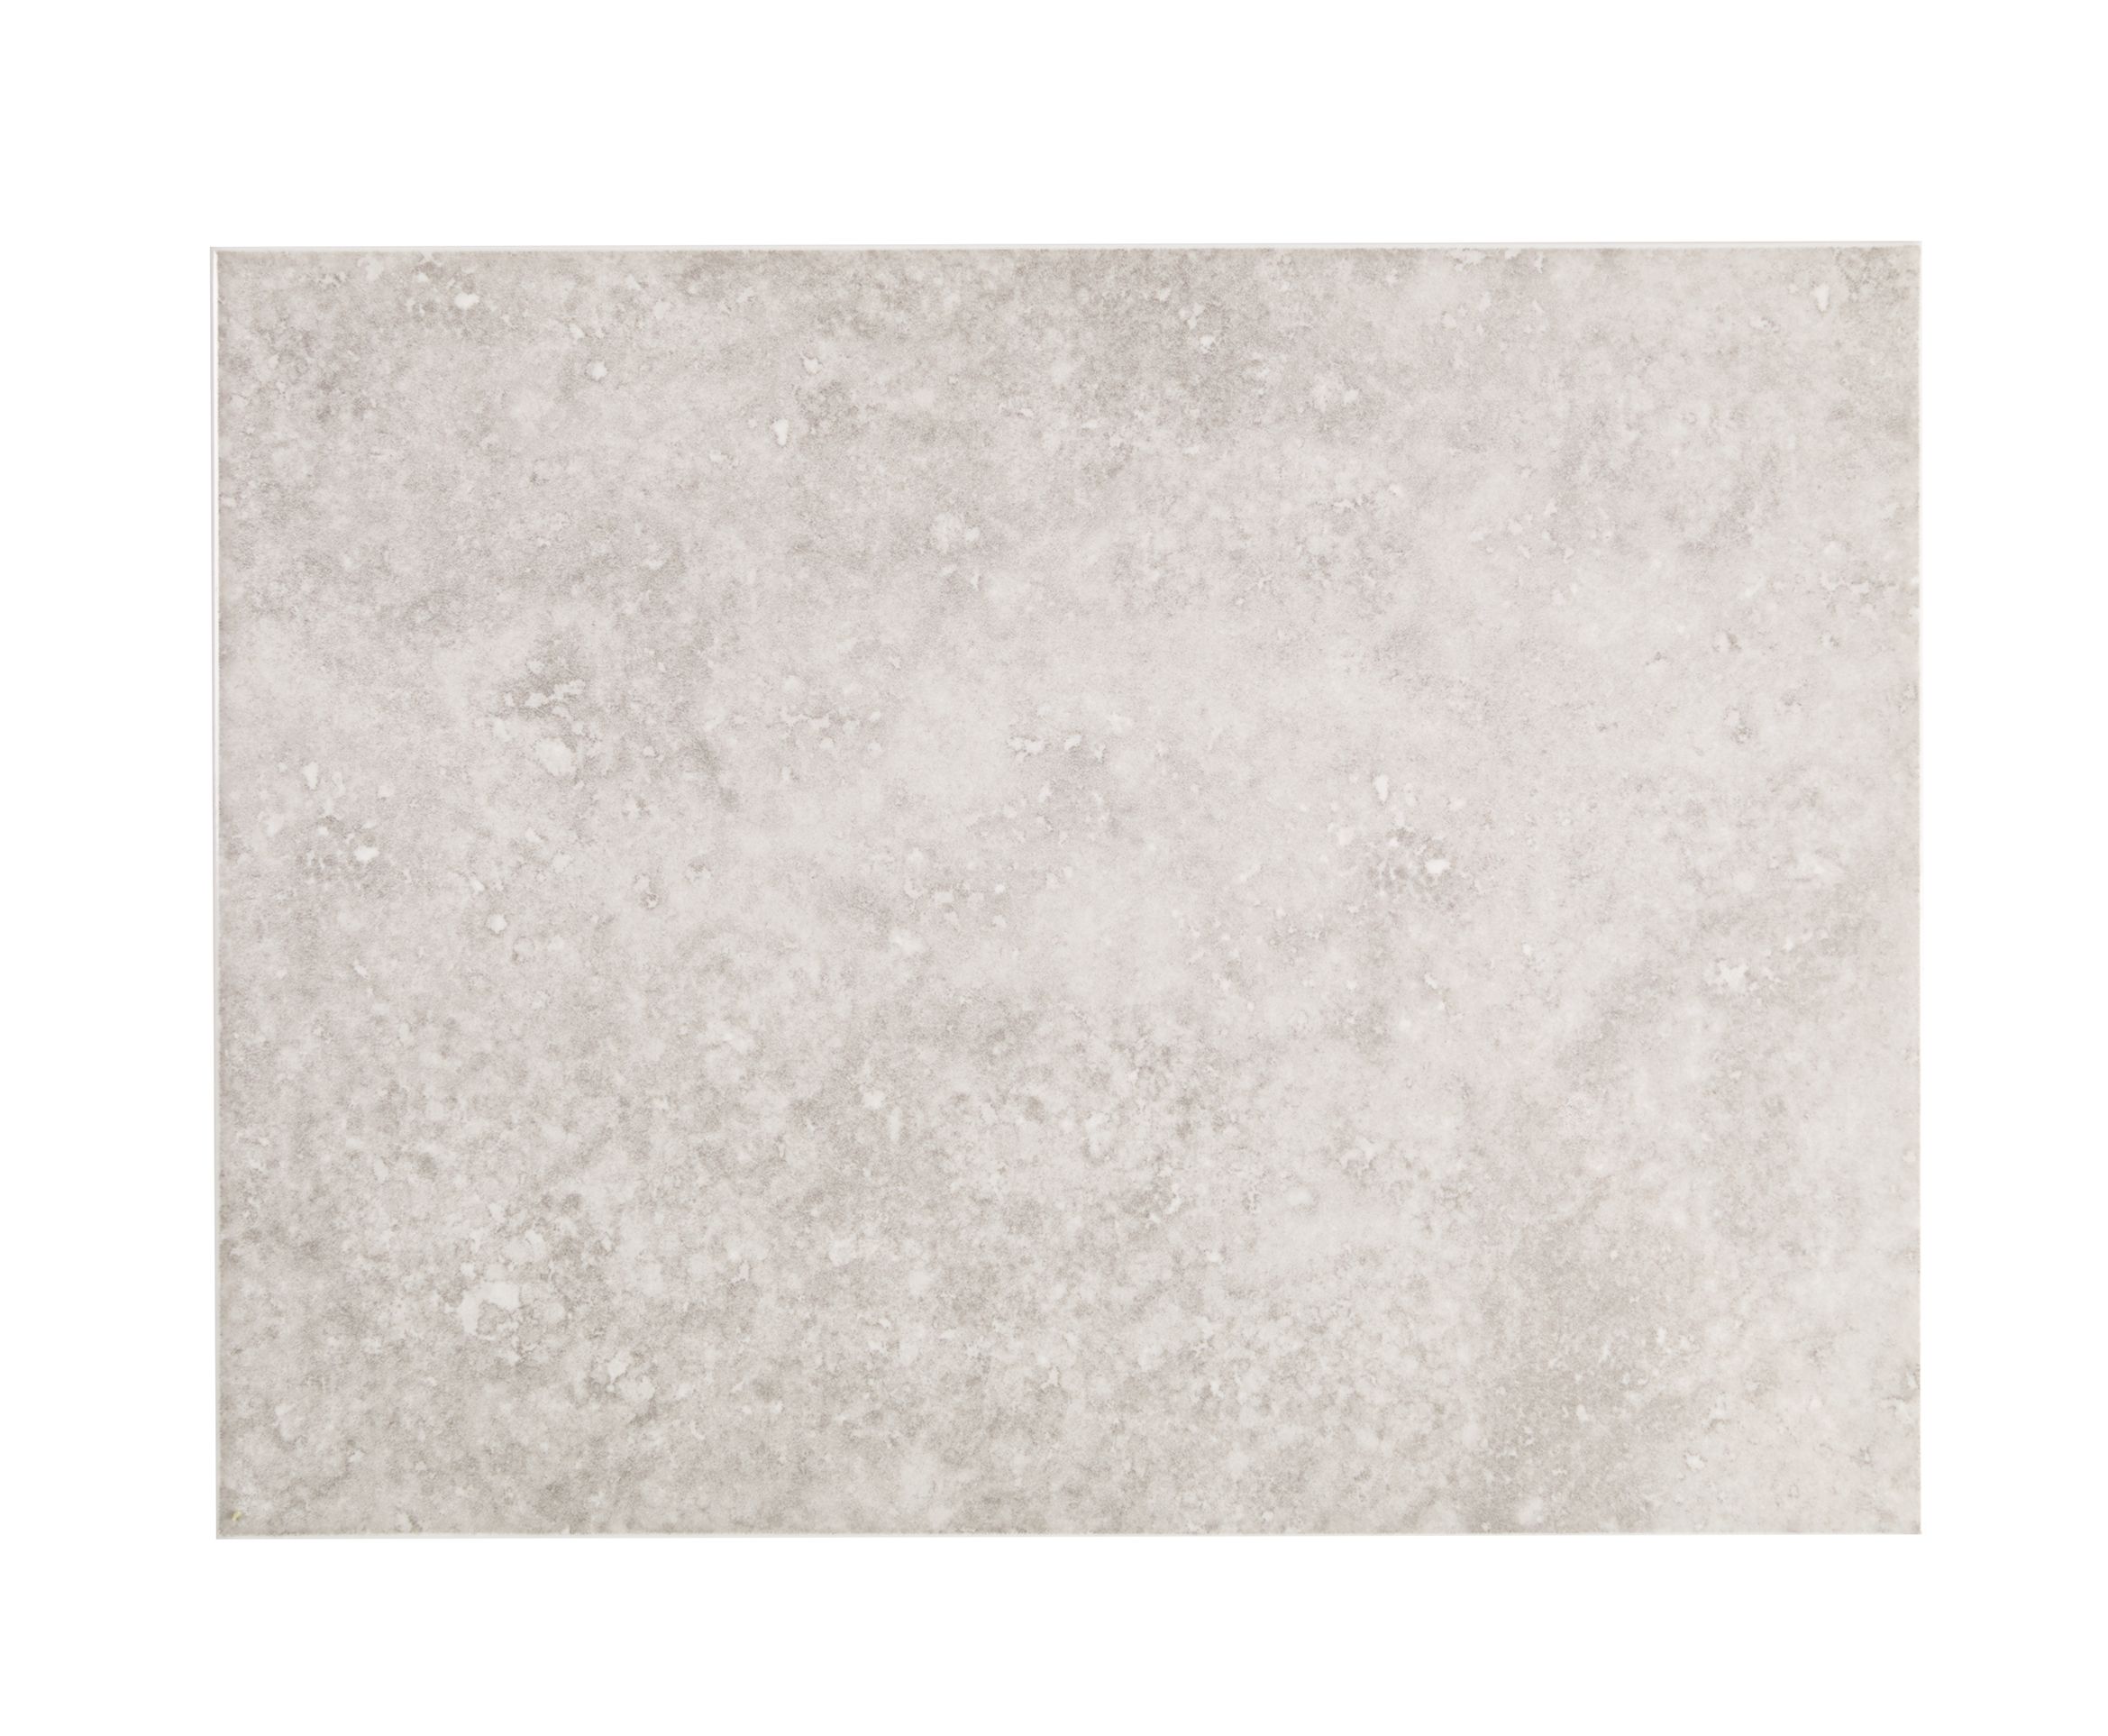 Wickes Tivoli Grey Ceramic Wall Tile - 330 x 250mm - Sample